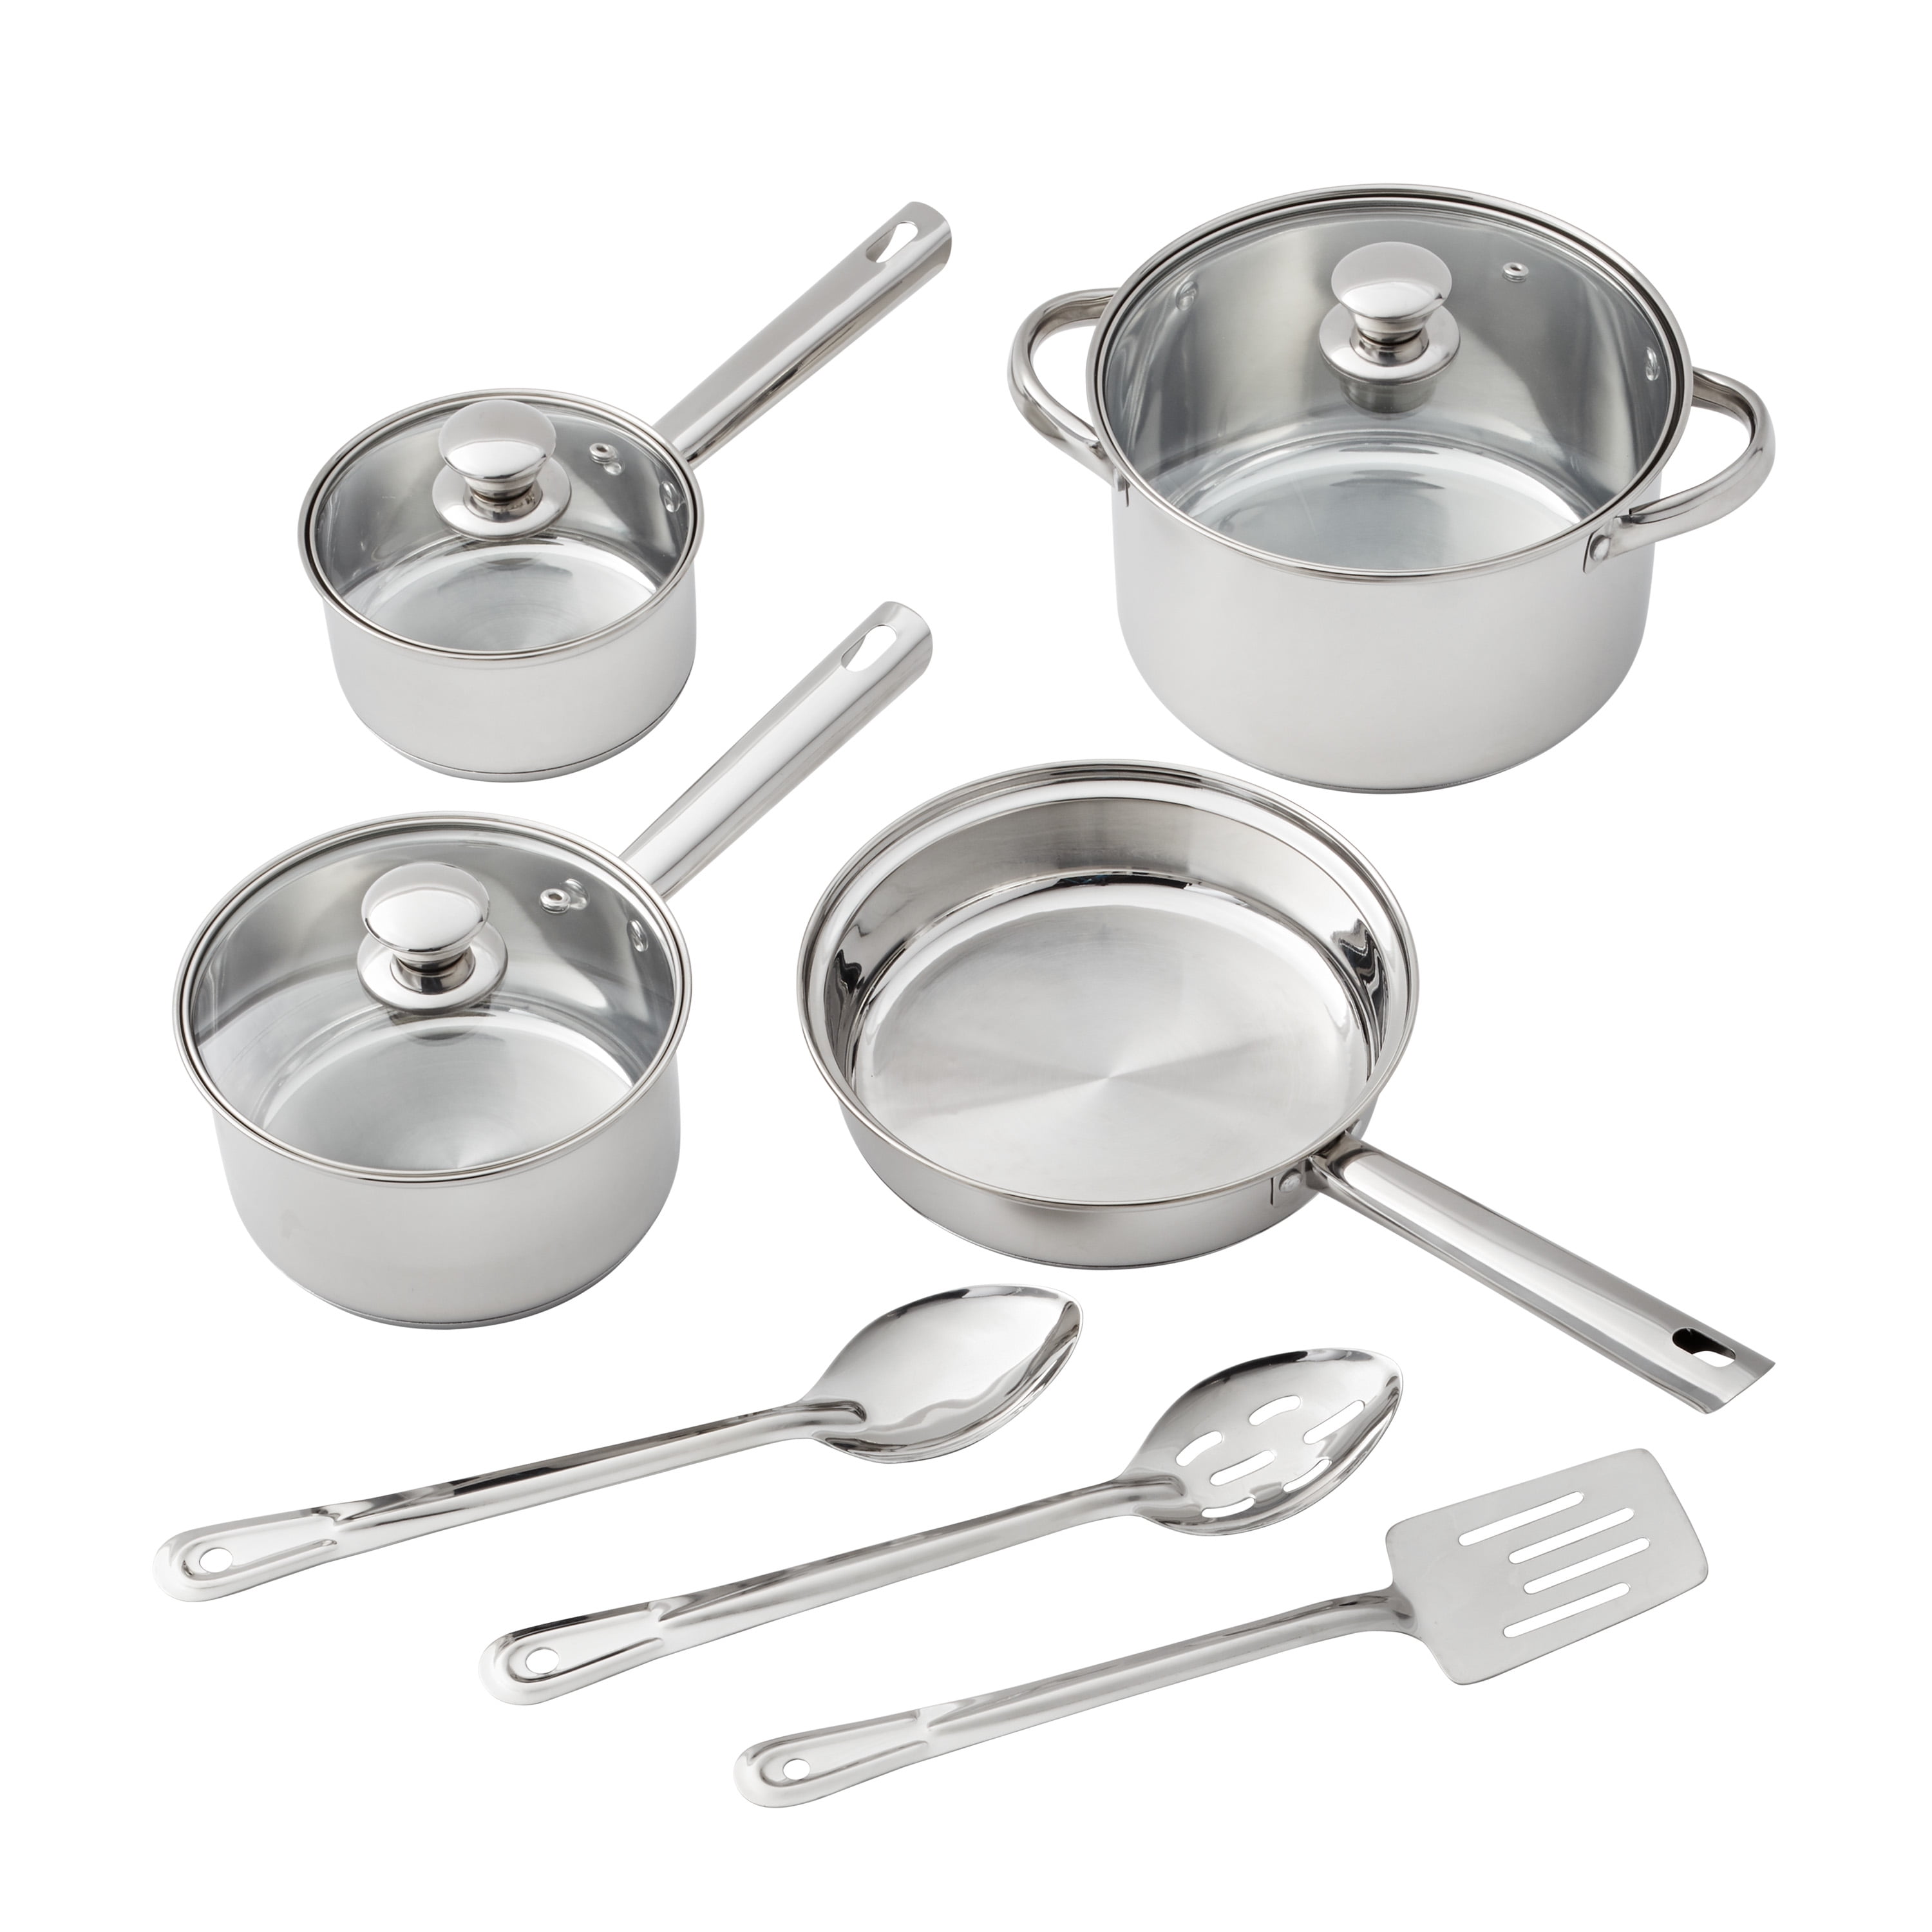 Stainless Steel 10 Piece Set, Kitchen Set, Cookware Set, Pots and Pans Set, Mainstays Brand